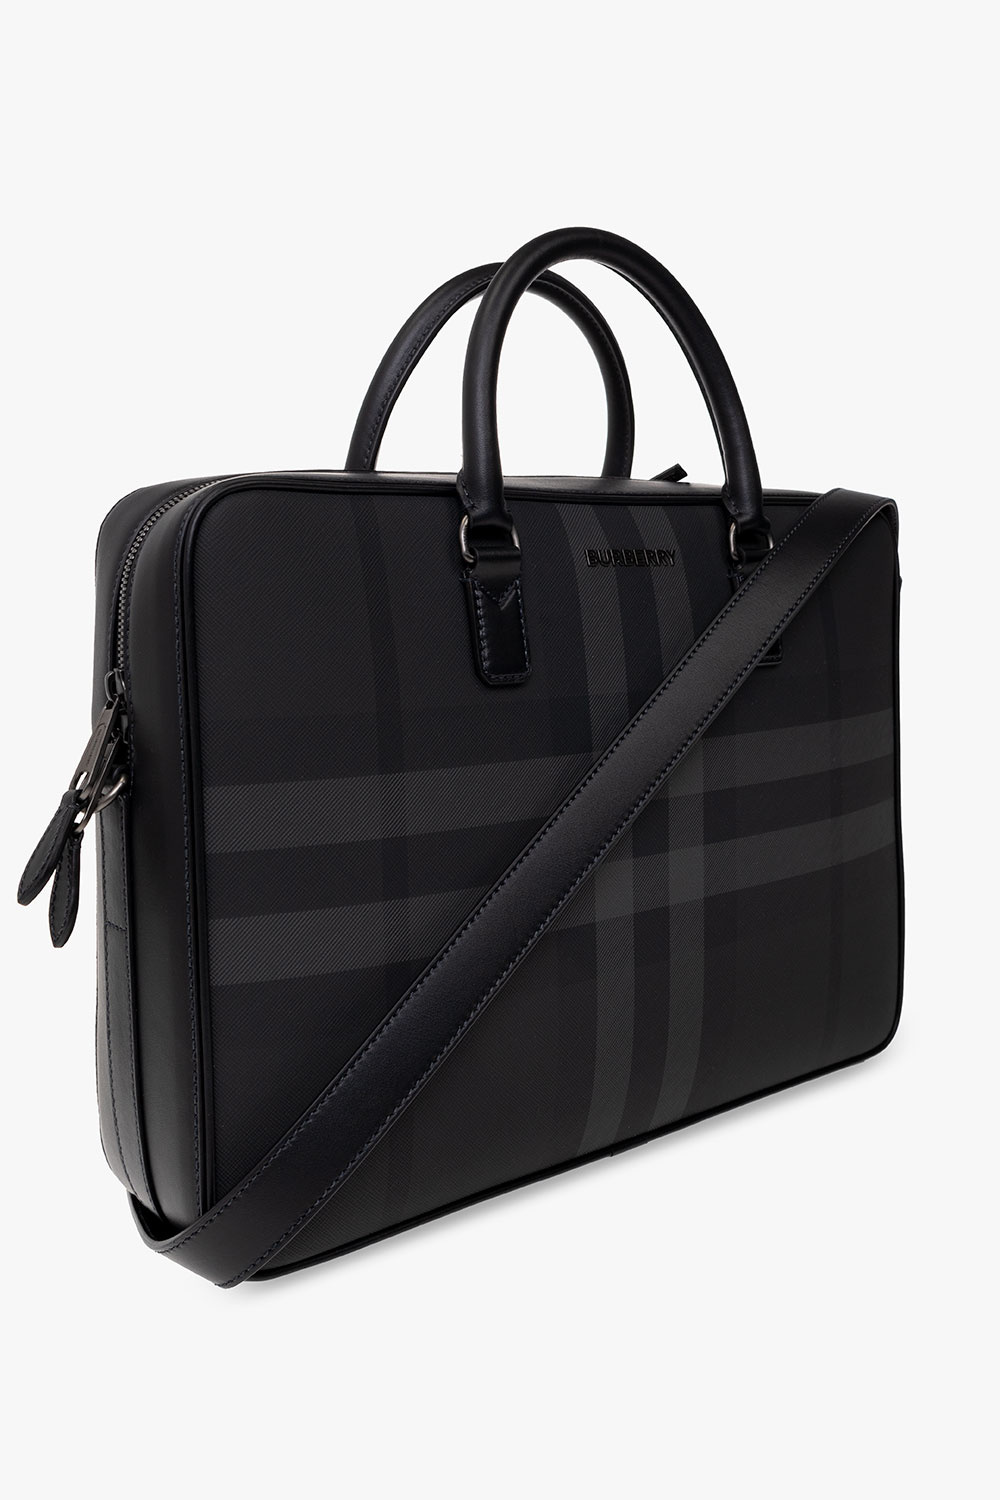 Burberry ‘Ainsworth’ briefcase | Men's Bags | Vitkac